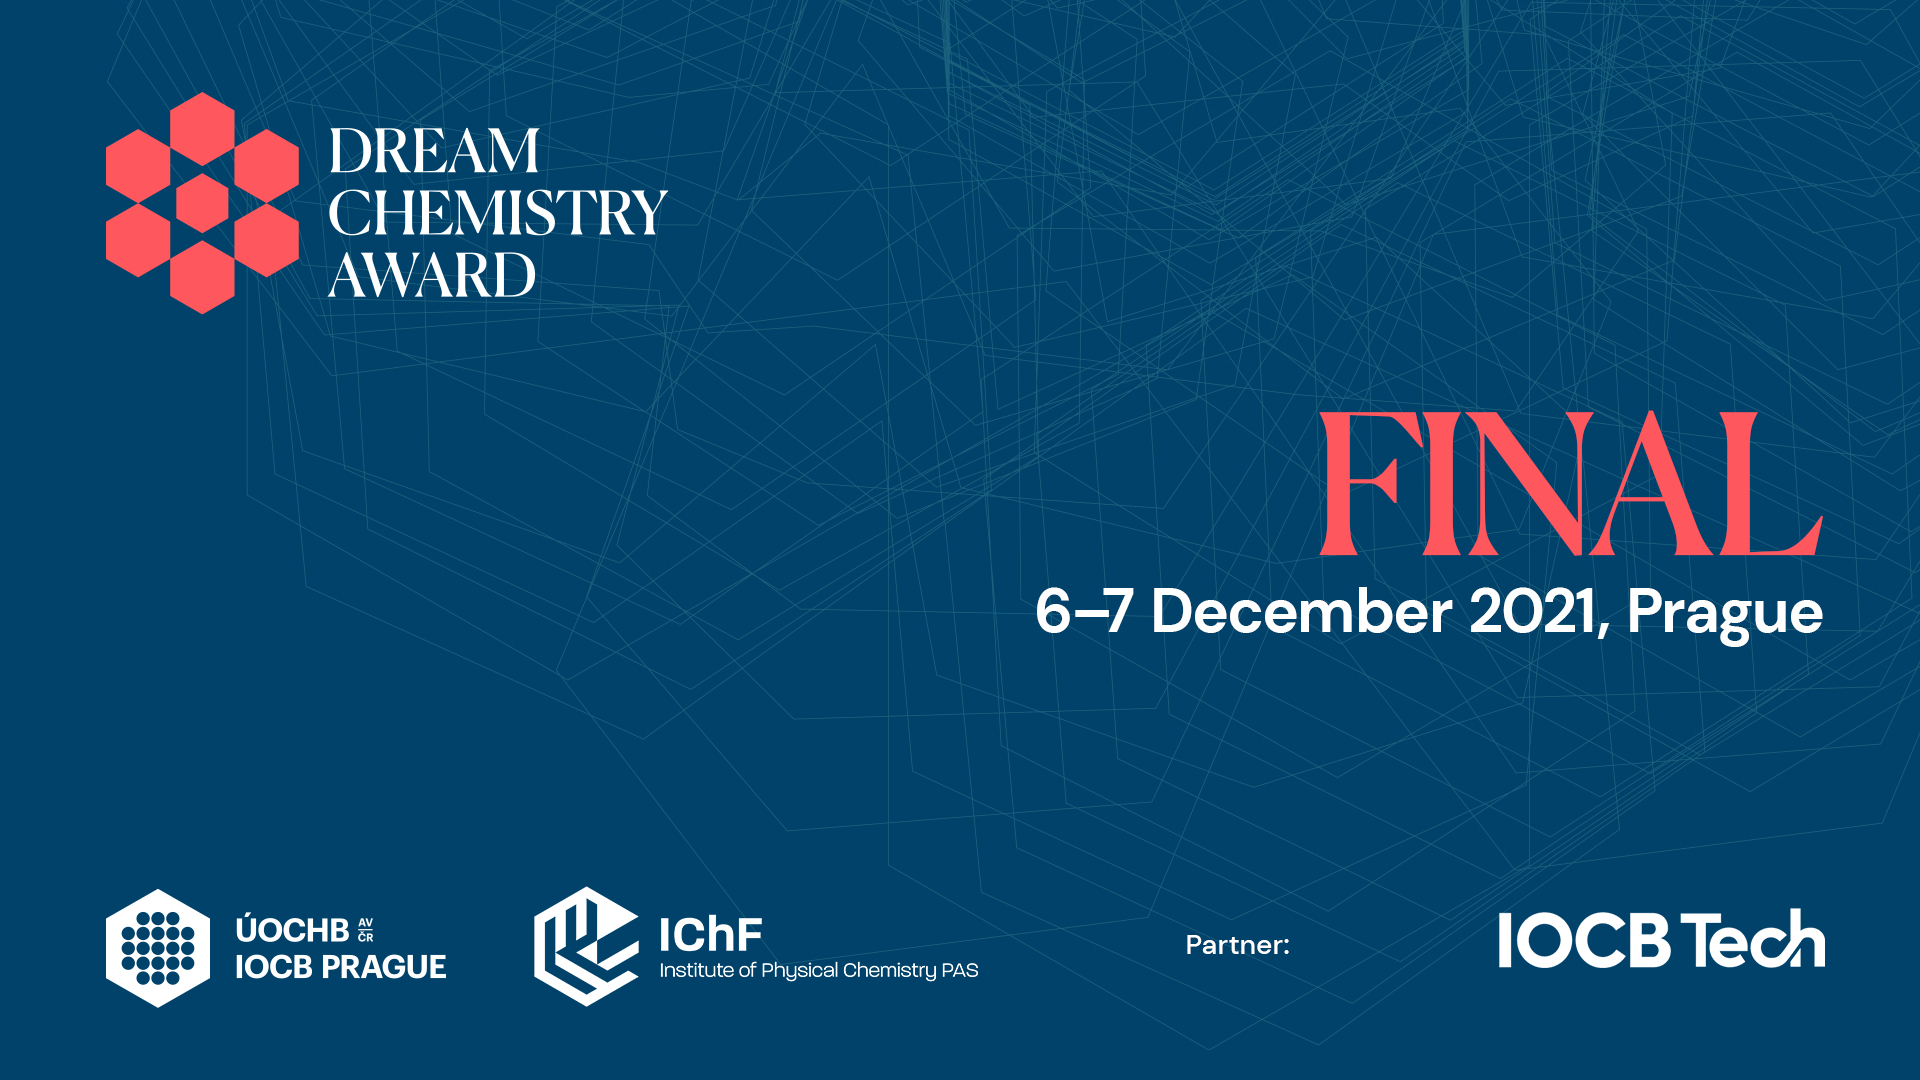 Dream Chemistry Award 2021 Final